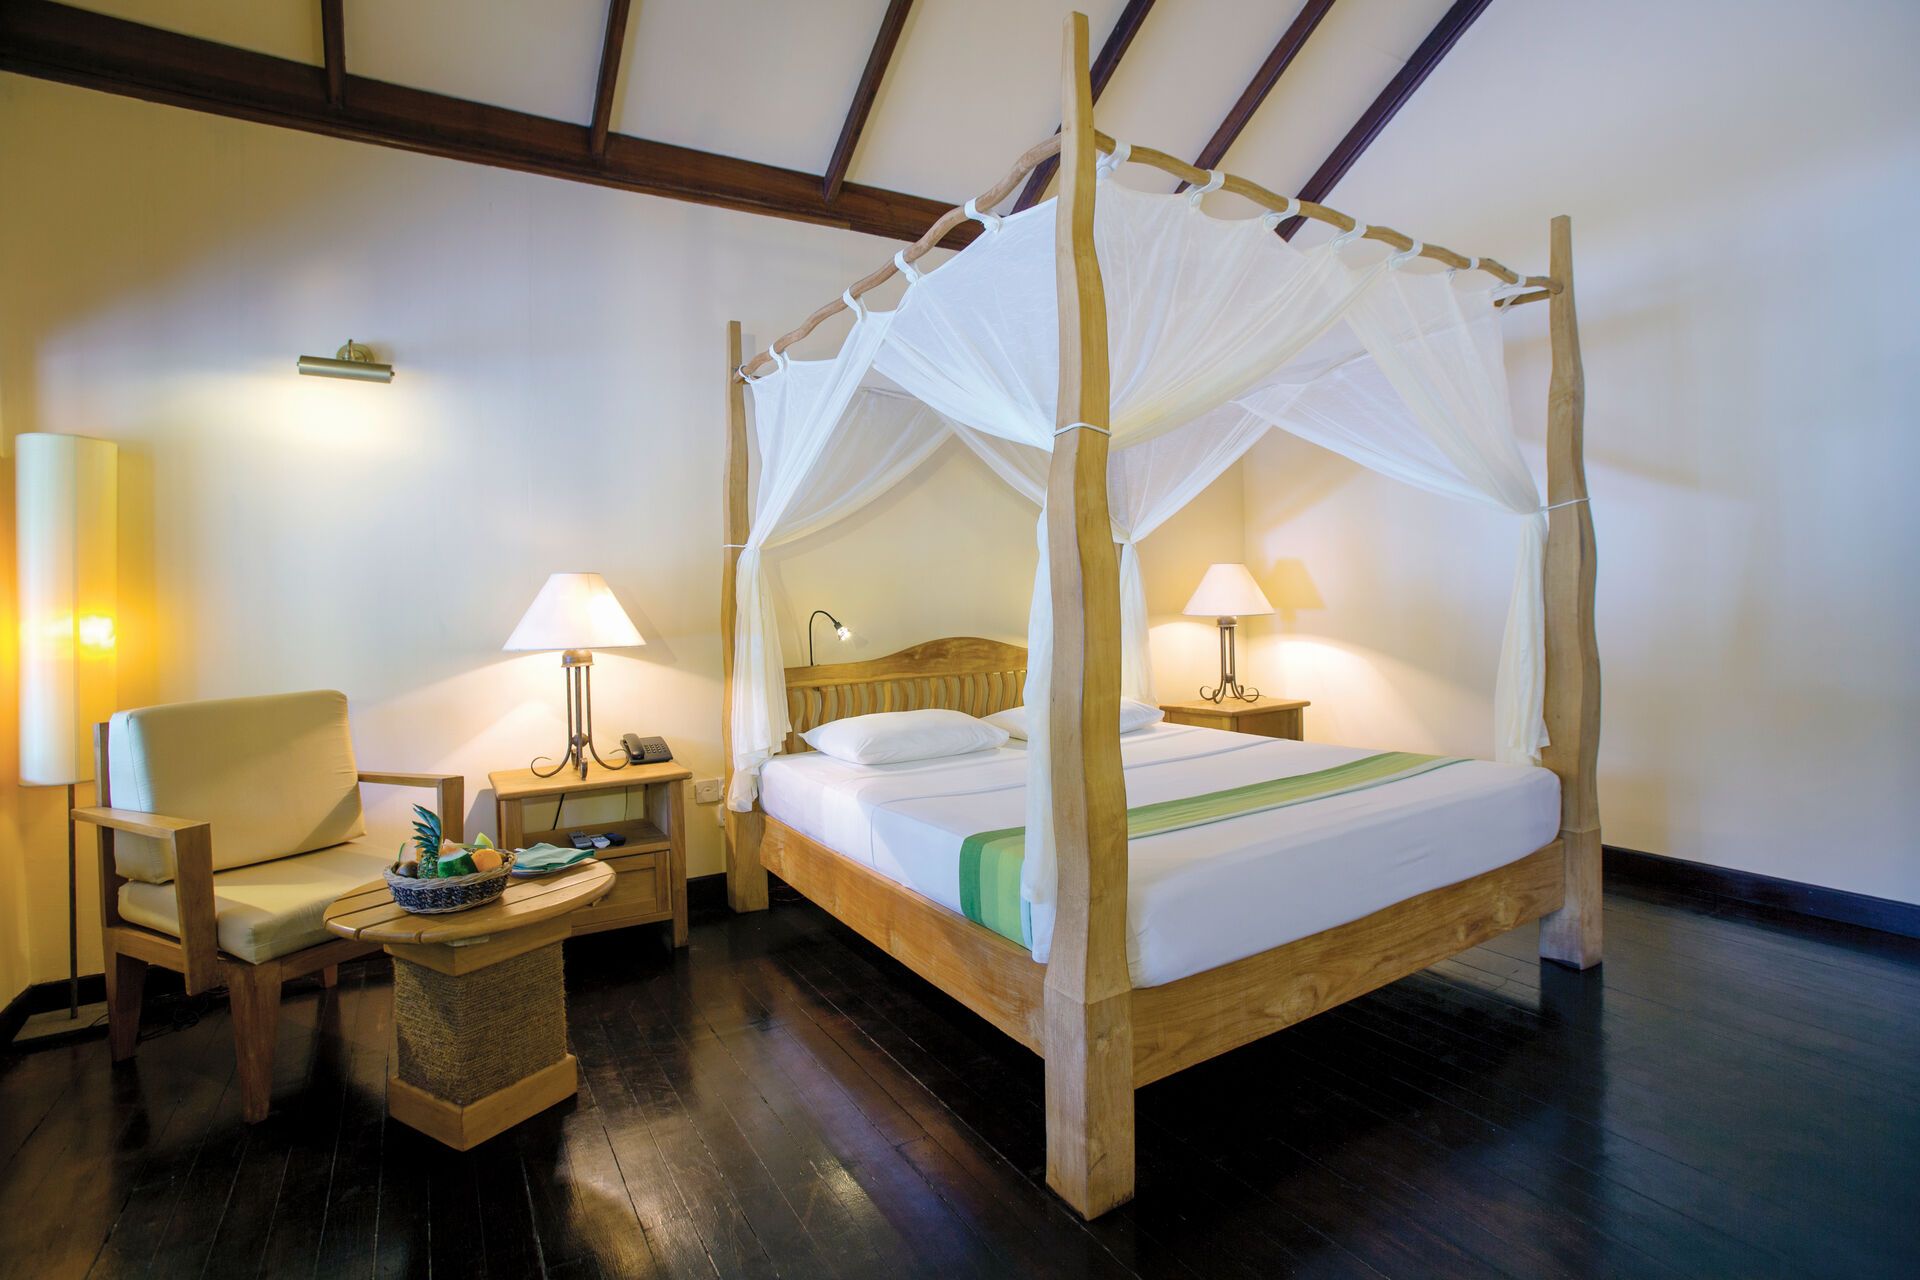 Maldives - Hotel Filitheyo Island Resort 4* - transfert inclus